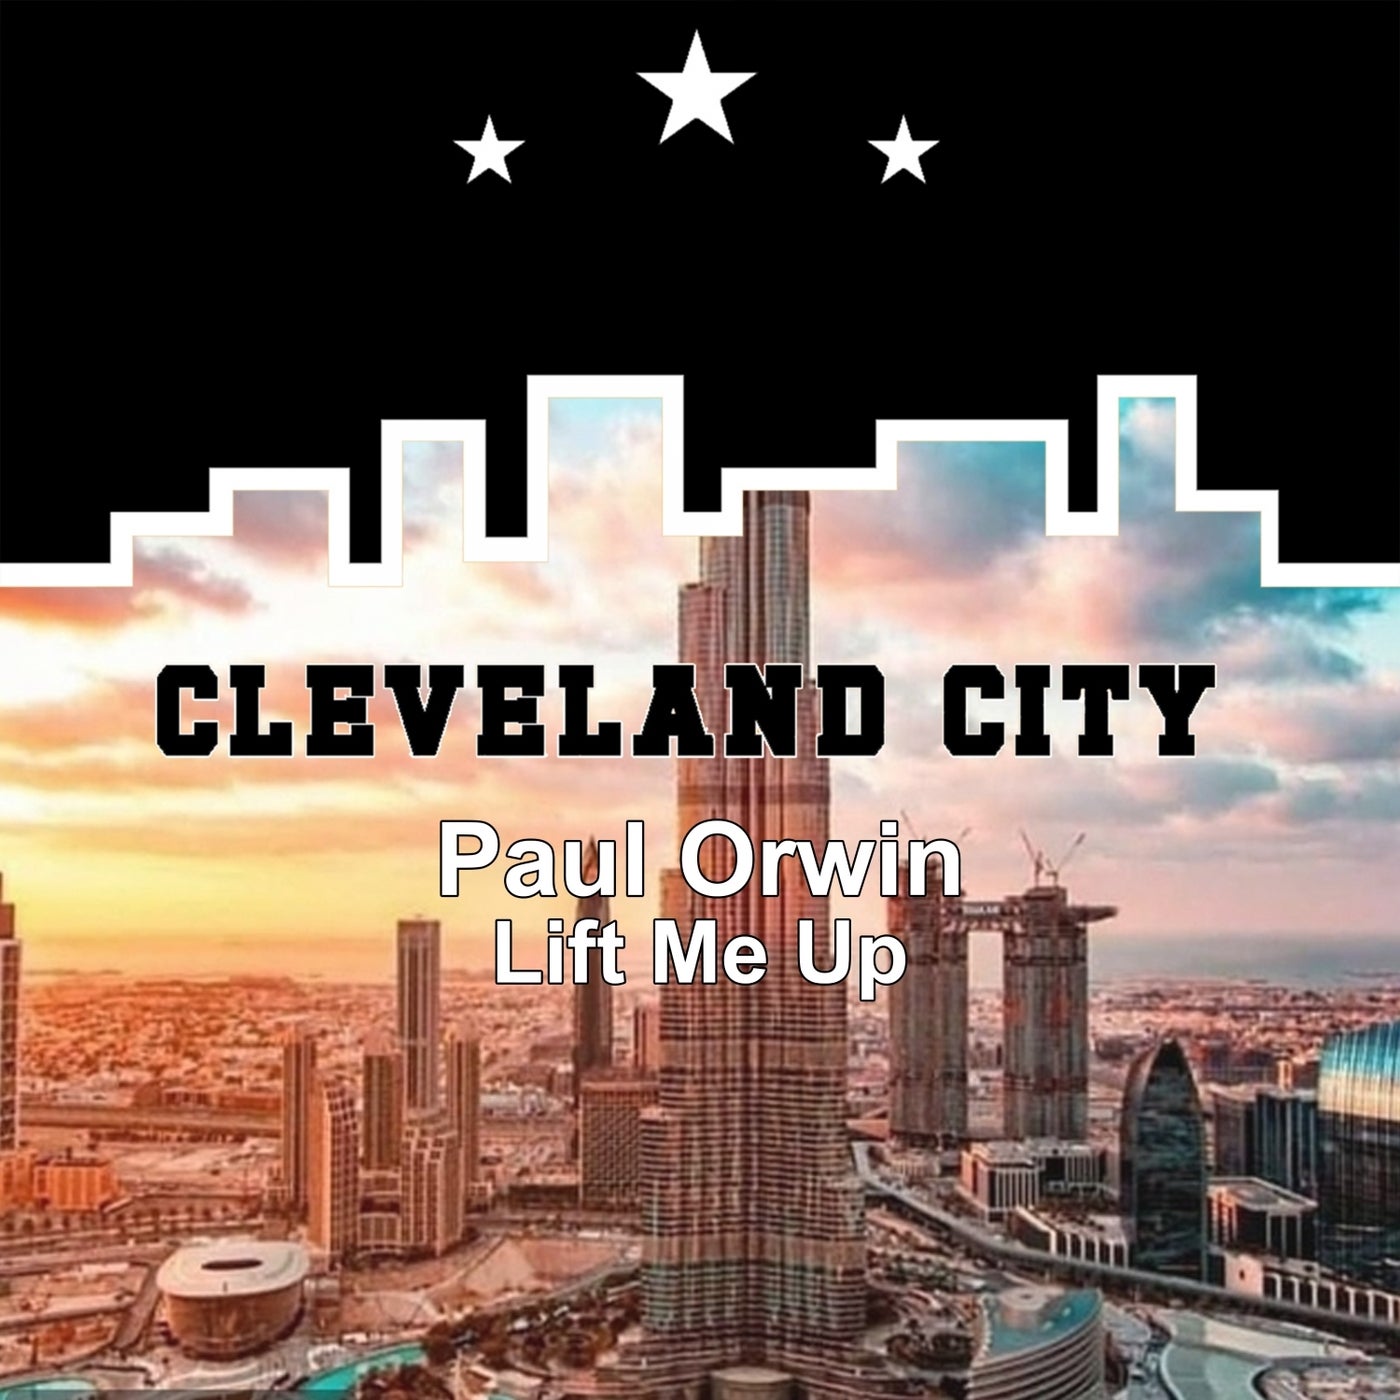 Paul Orwin - Lift Me Up [CCMM123]